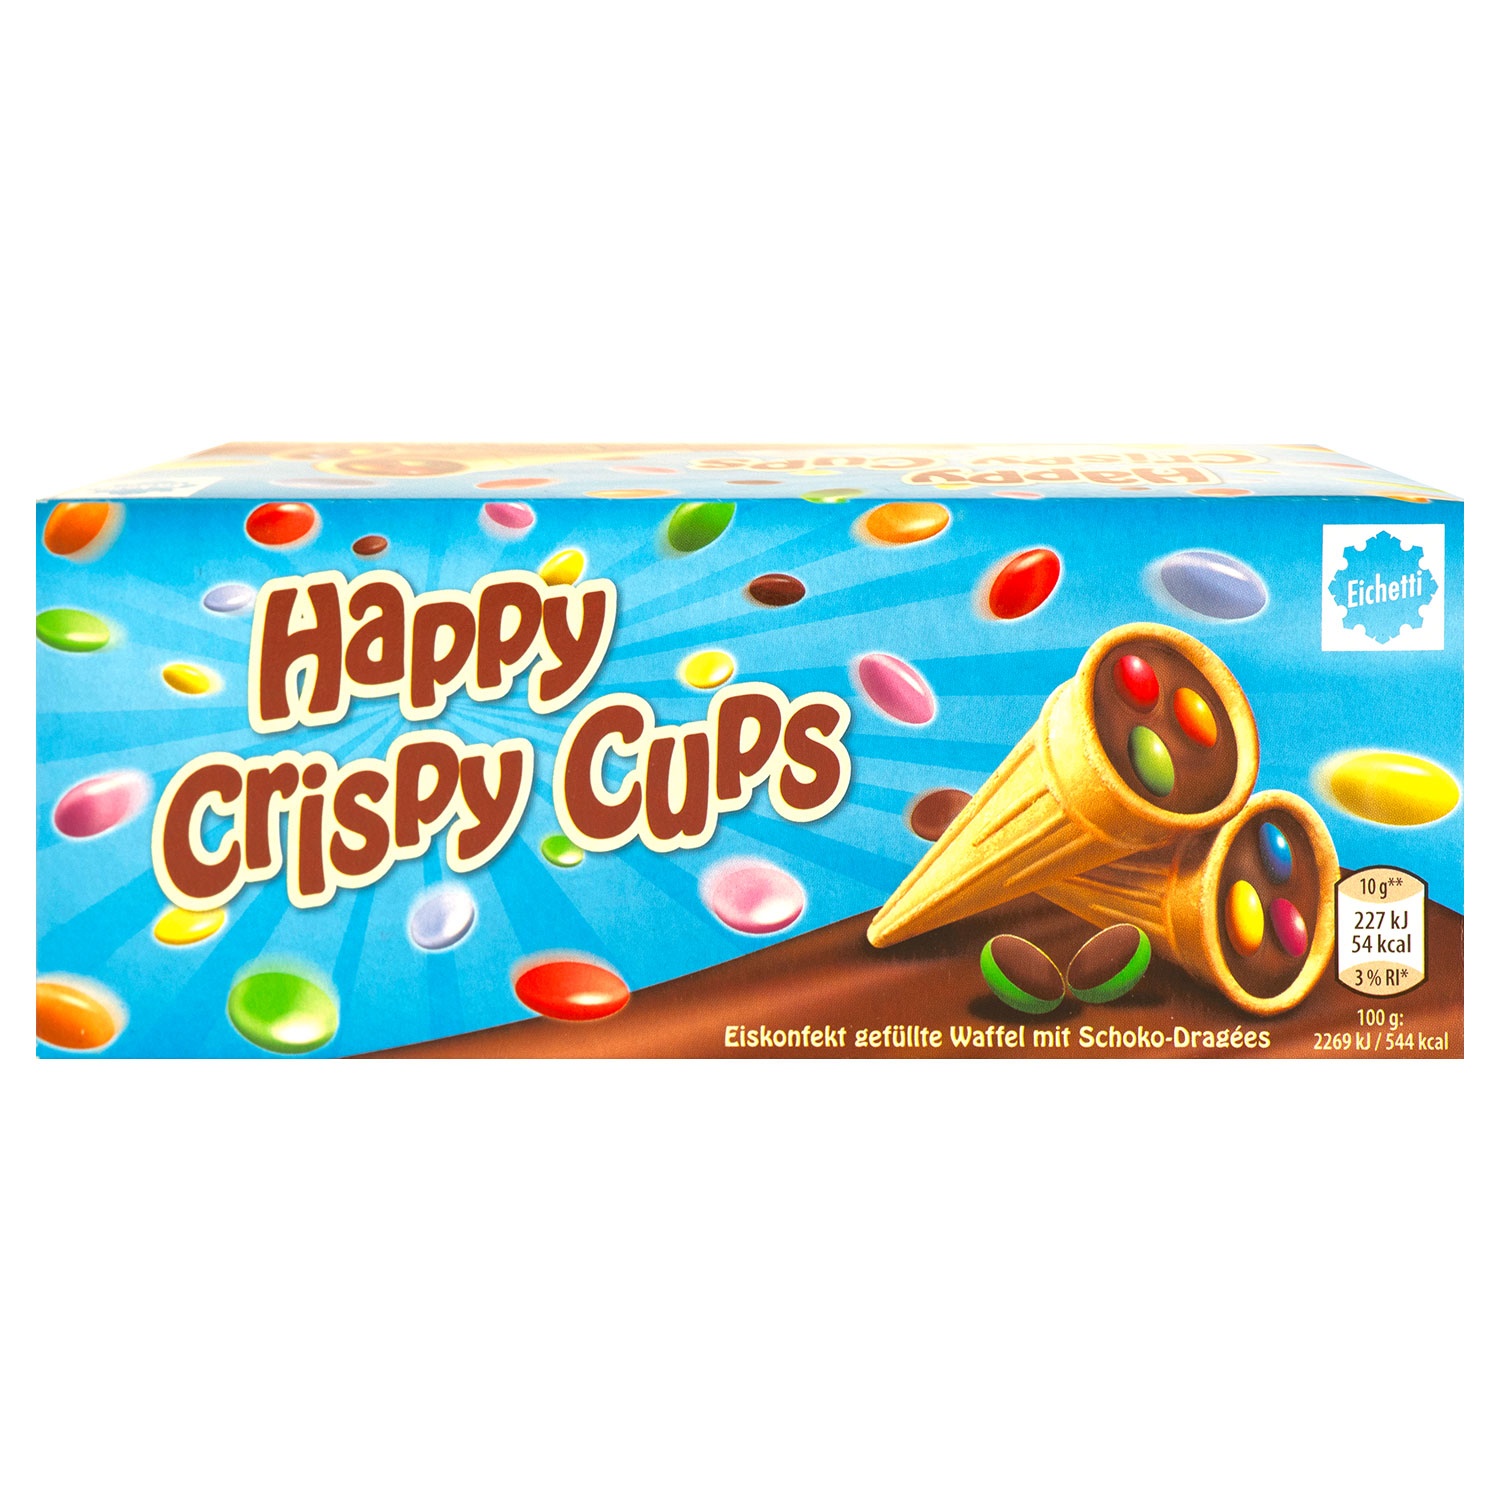 EICHETTI Crispy Cups® 100 g